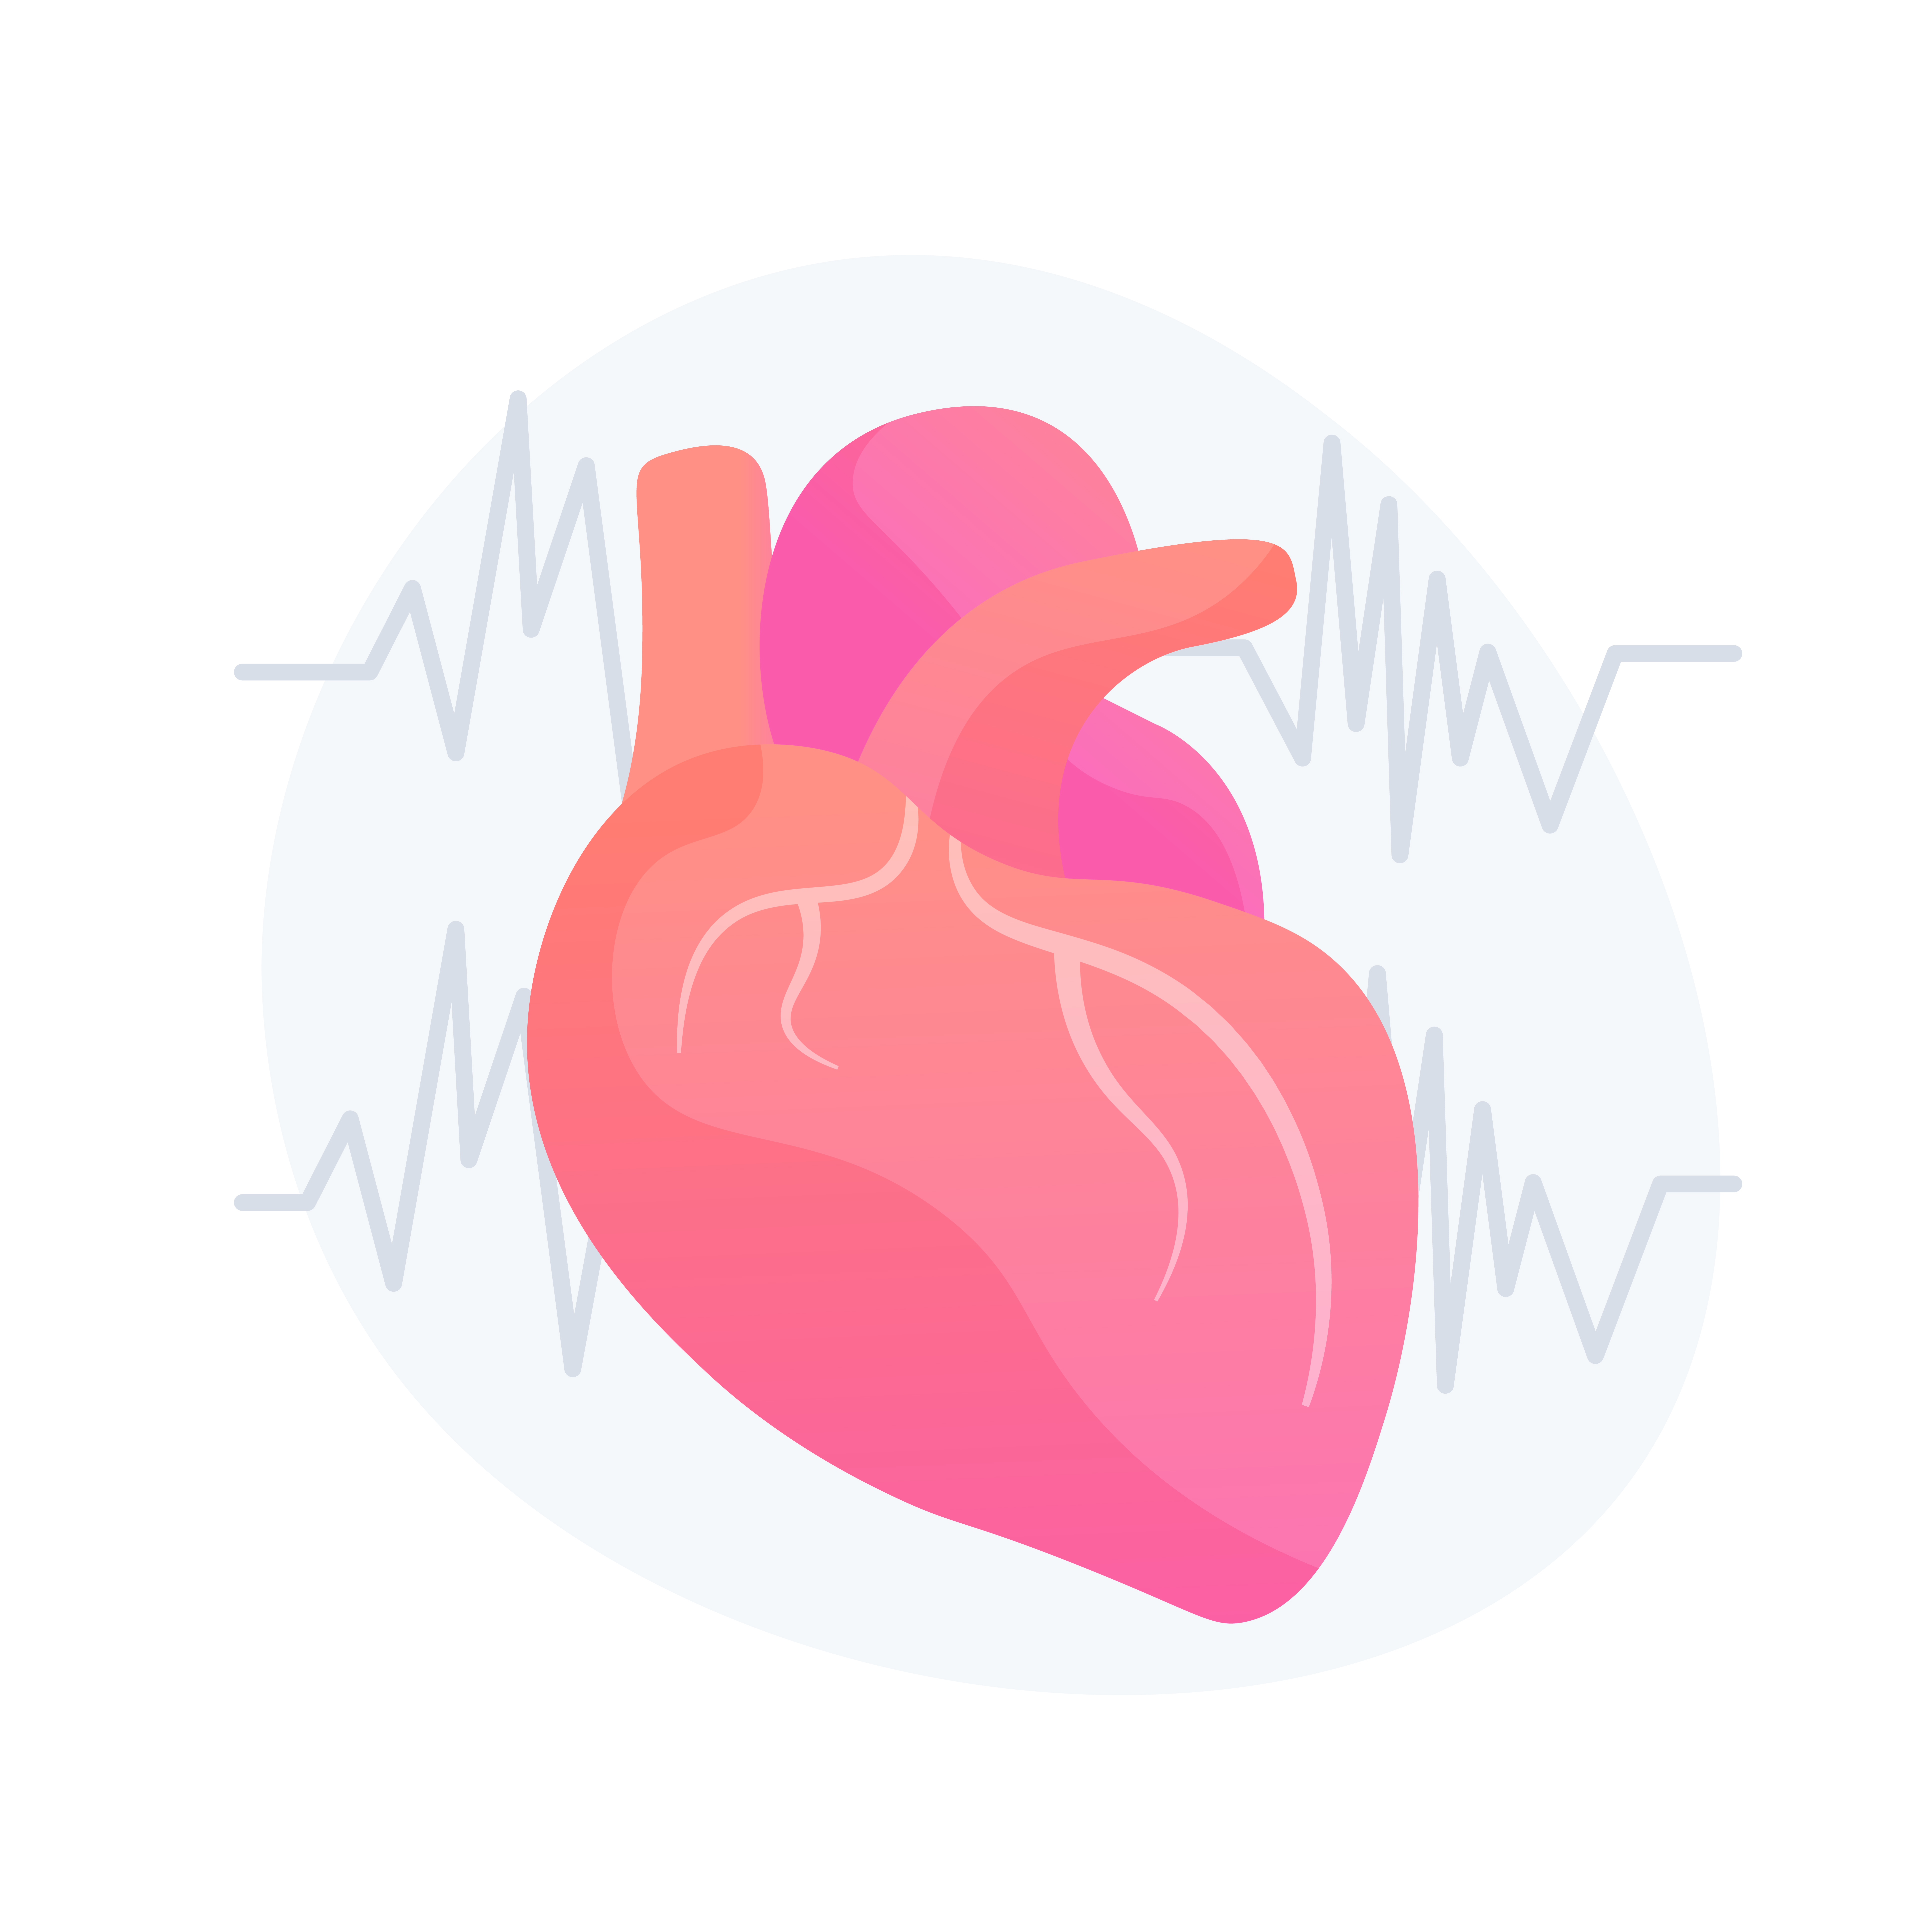 Visual description of heart with ECG waves